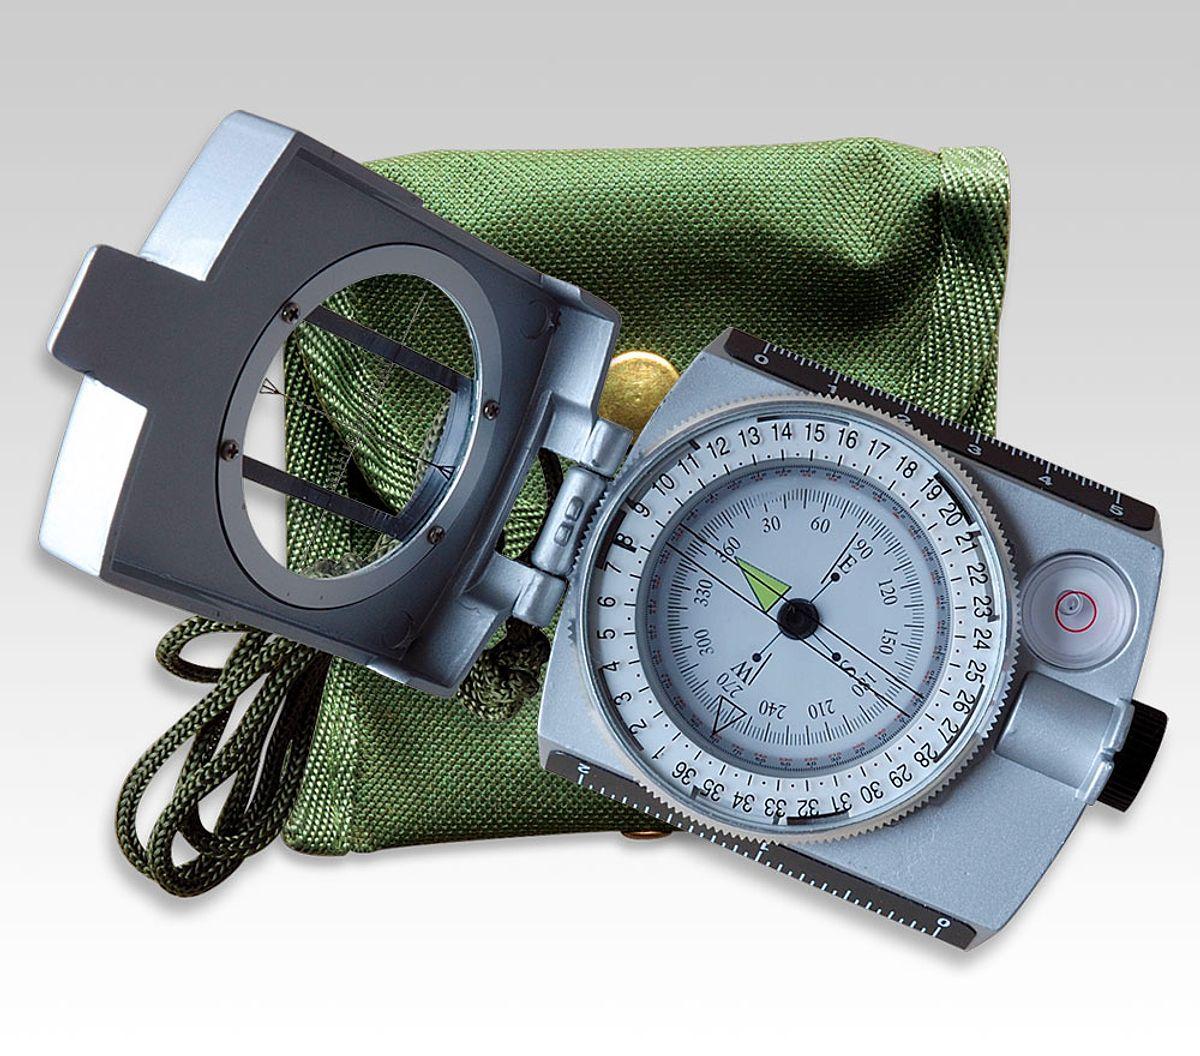 Beta compas. Армейский компас Military Compass с металлическим корпусом 3103. Компас финский армейский Suunto 1930е.